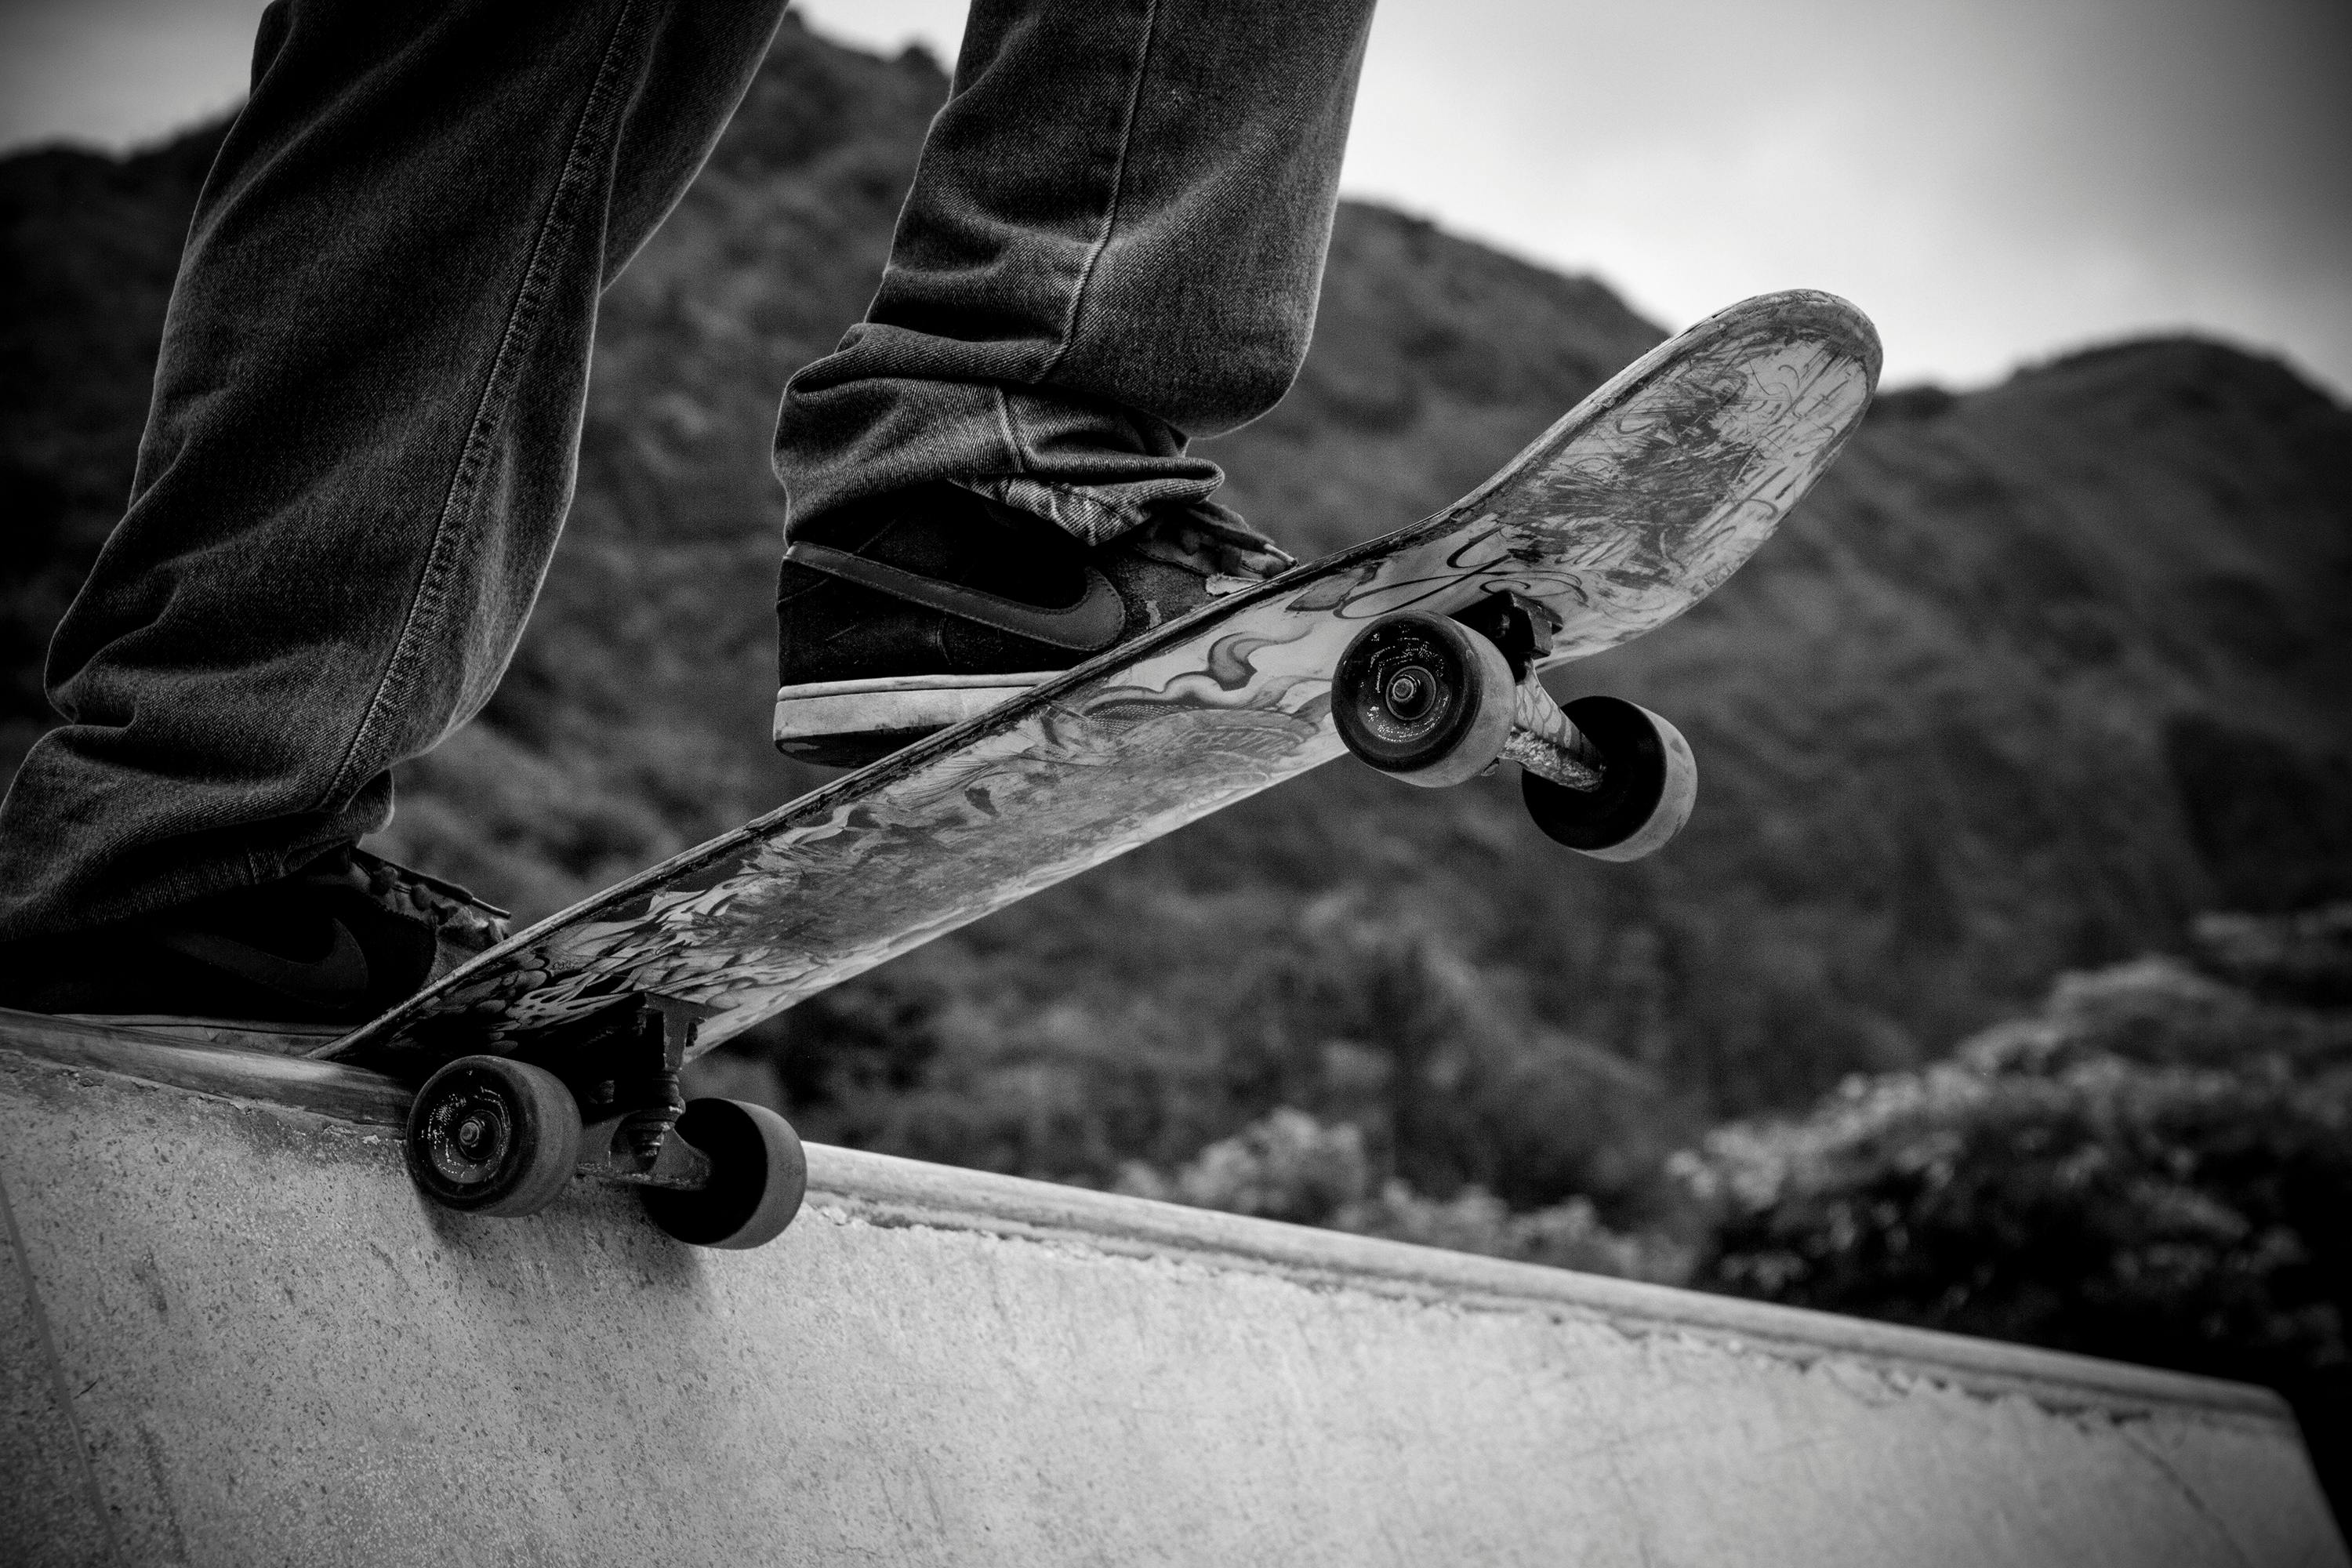 Wallpaper Skateboard Images  Free Download on Freepik